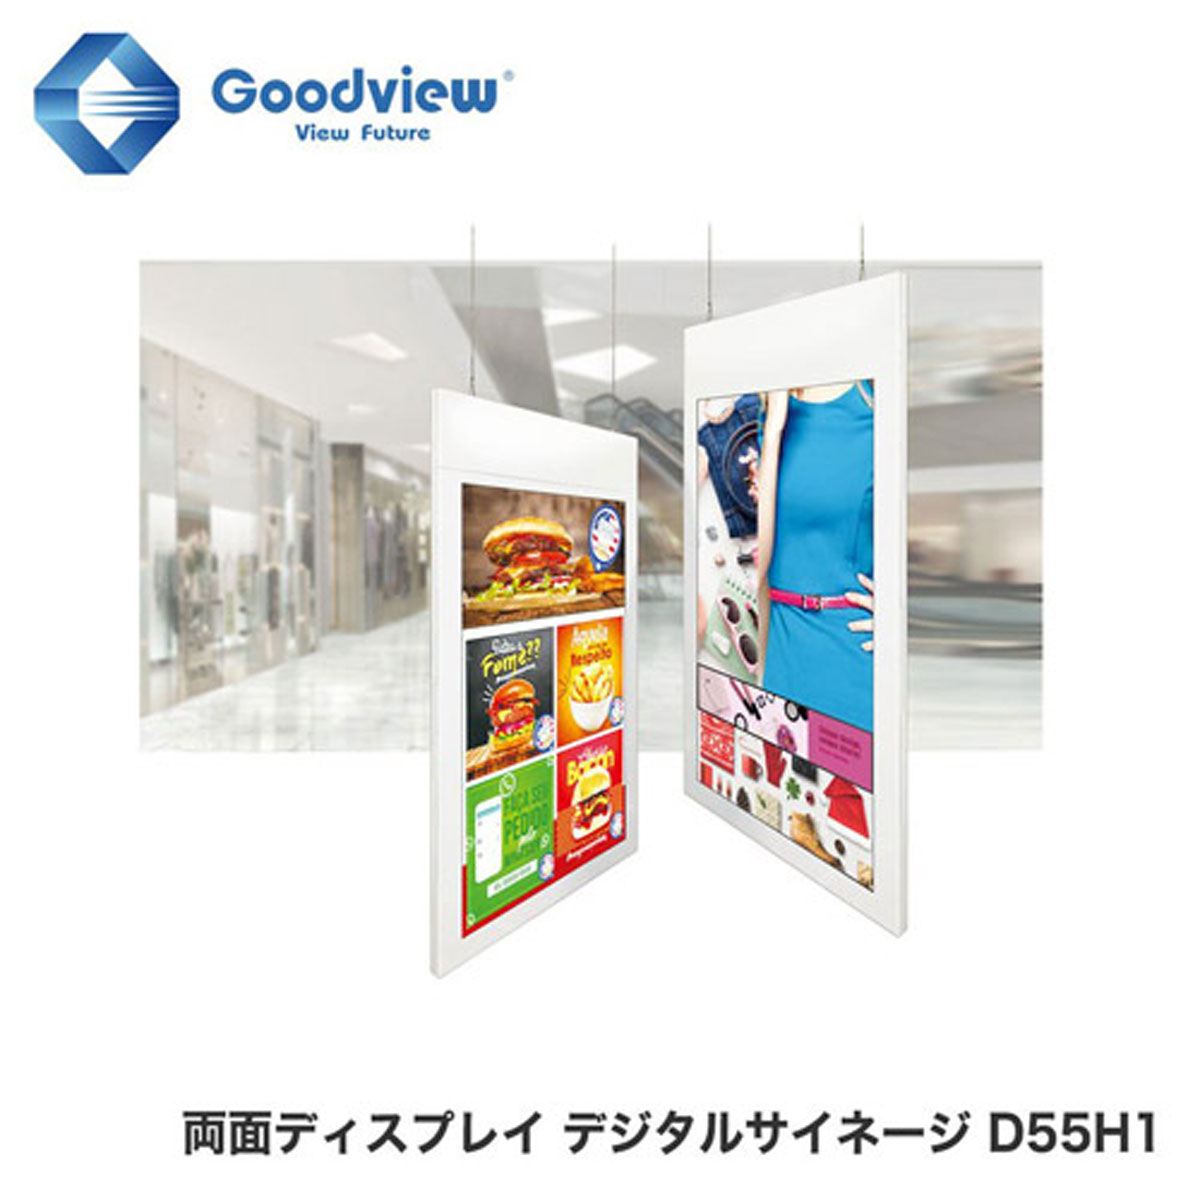 Goodview デジタルサイネージ 両面サイネージ 800/450カンデラ 55型【D55H1】